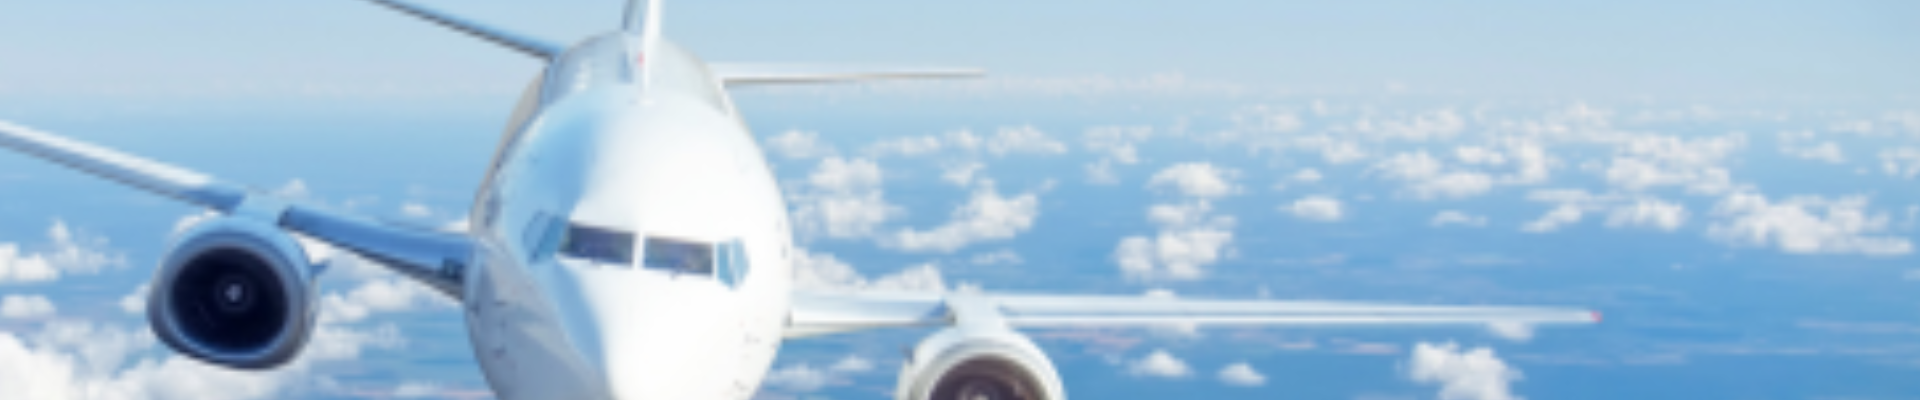 Logistics UK responds to SAF Mandate aviation fuel plan announcement